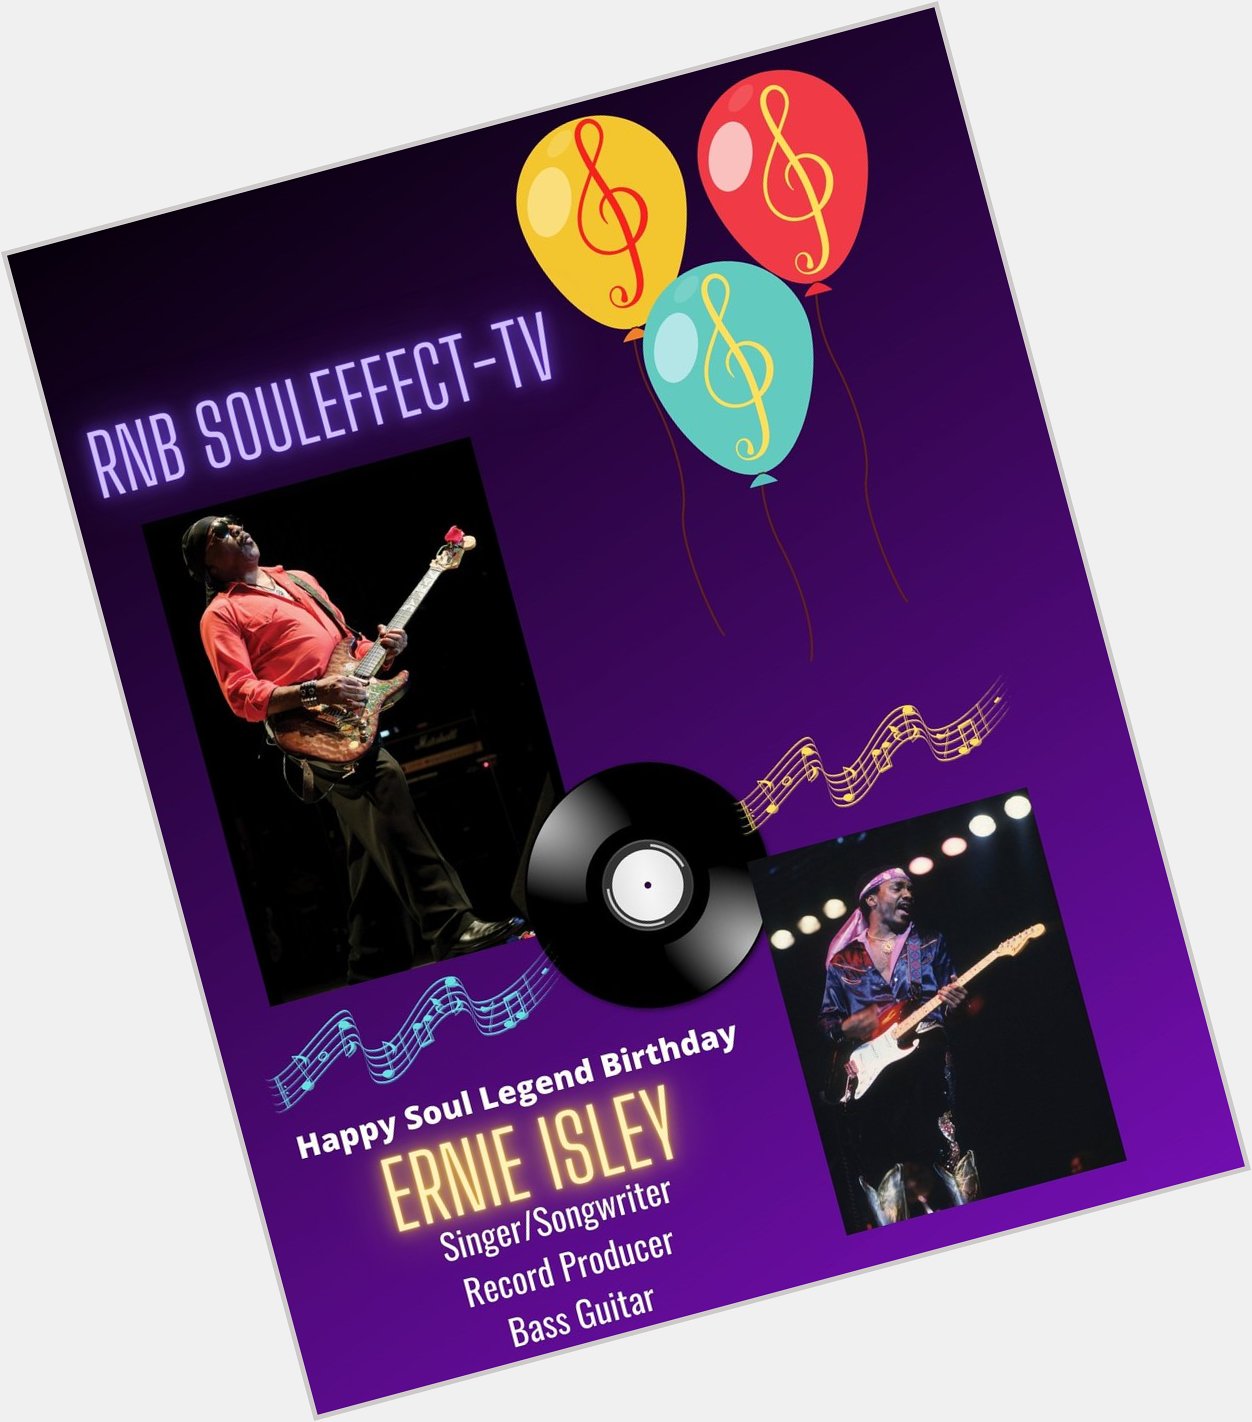 Happy Soul Legend Birthday 
Ernie Isley 